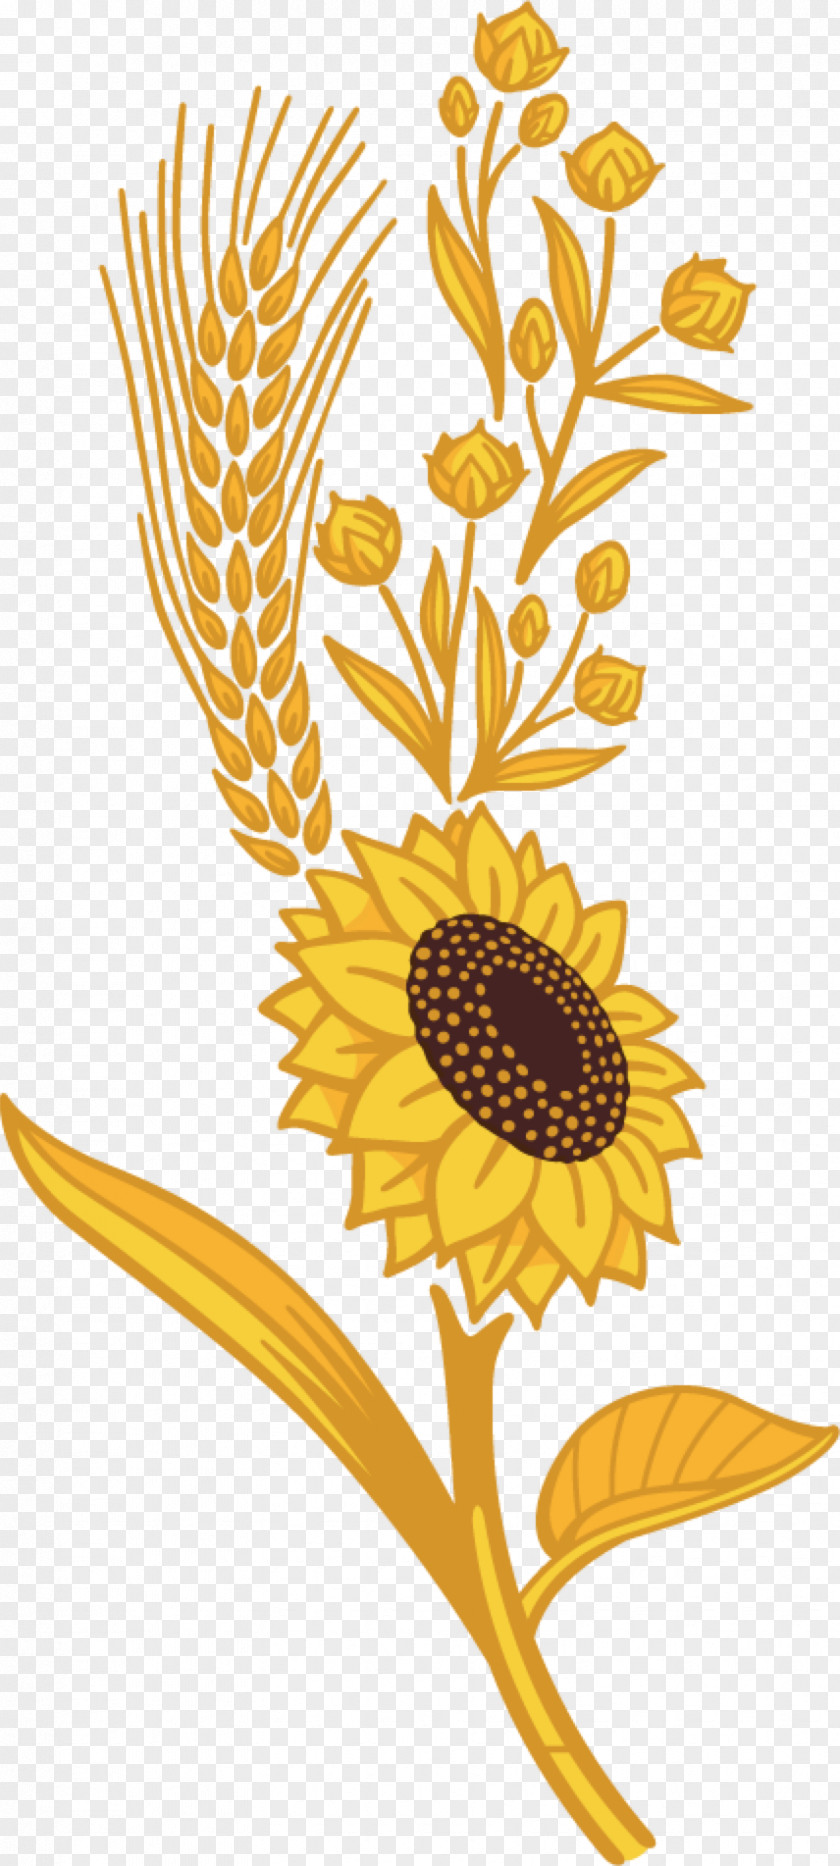 Bagel Khorasan Wheat Triticale Sunflower Seed Whole Grain PNG